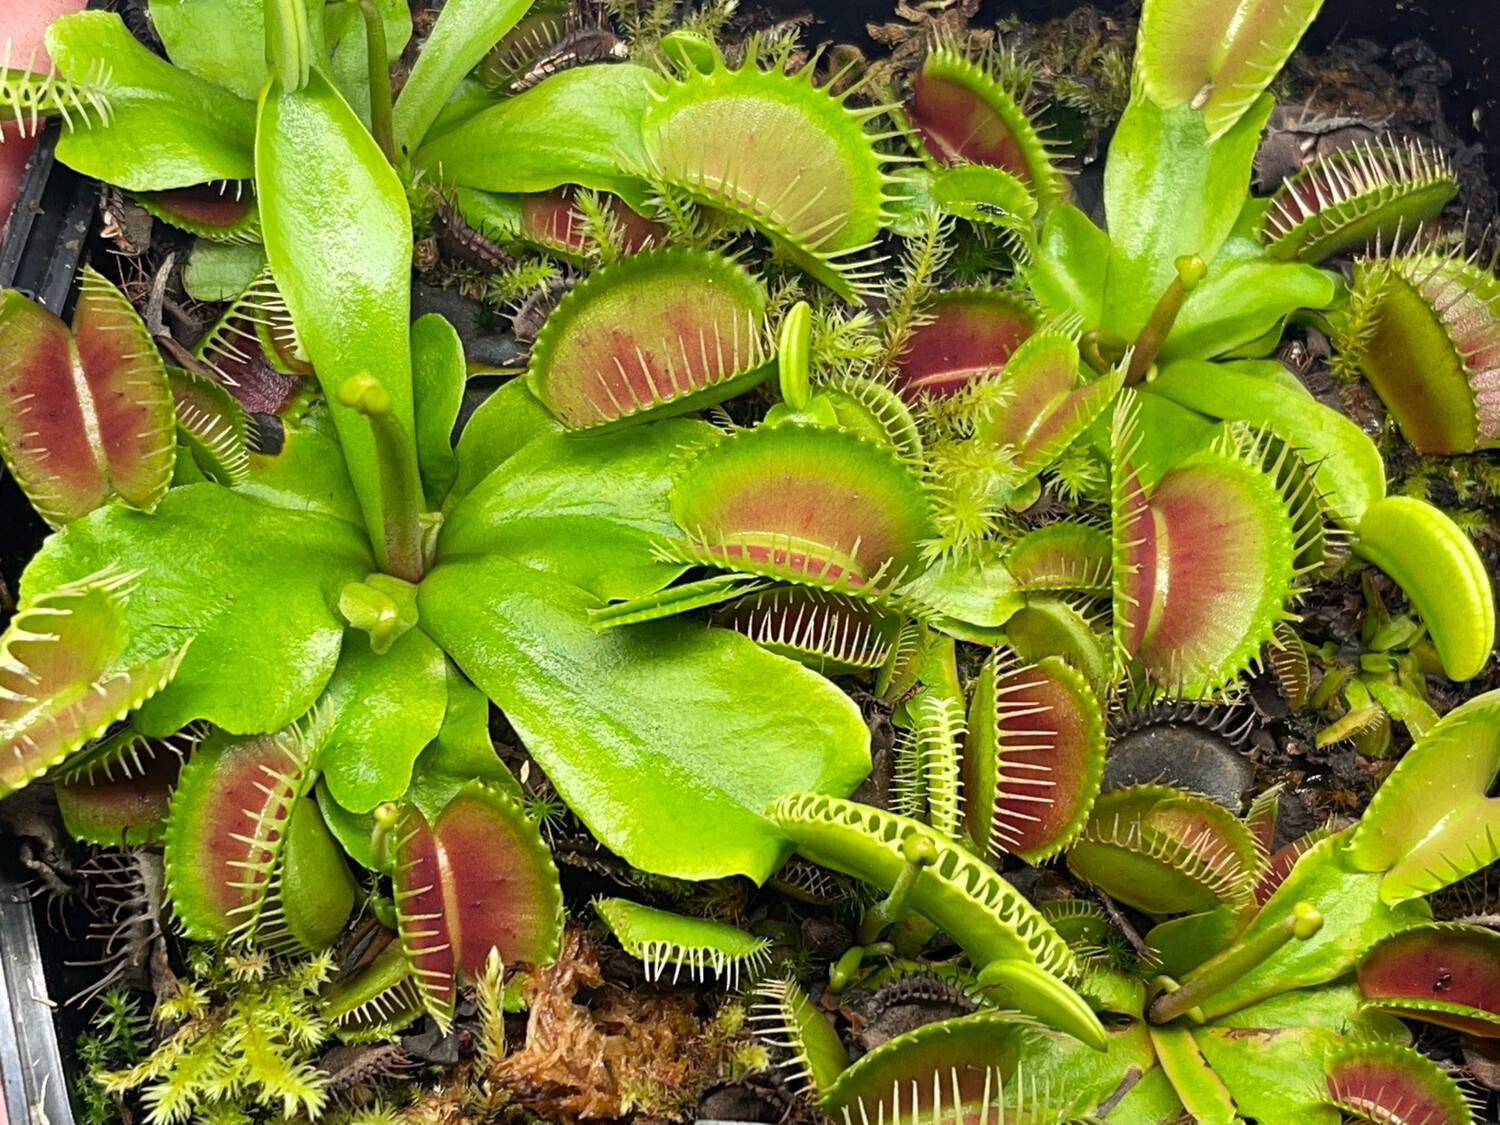 Dionaea muscipula “Carolina State Beach Park” Venus Flytrap (small)